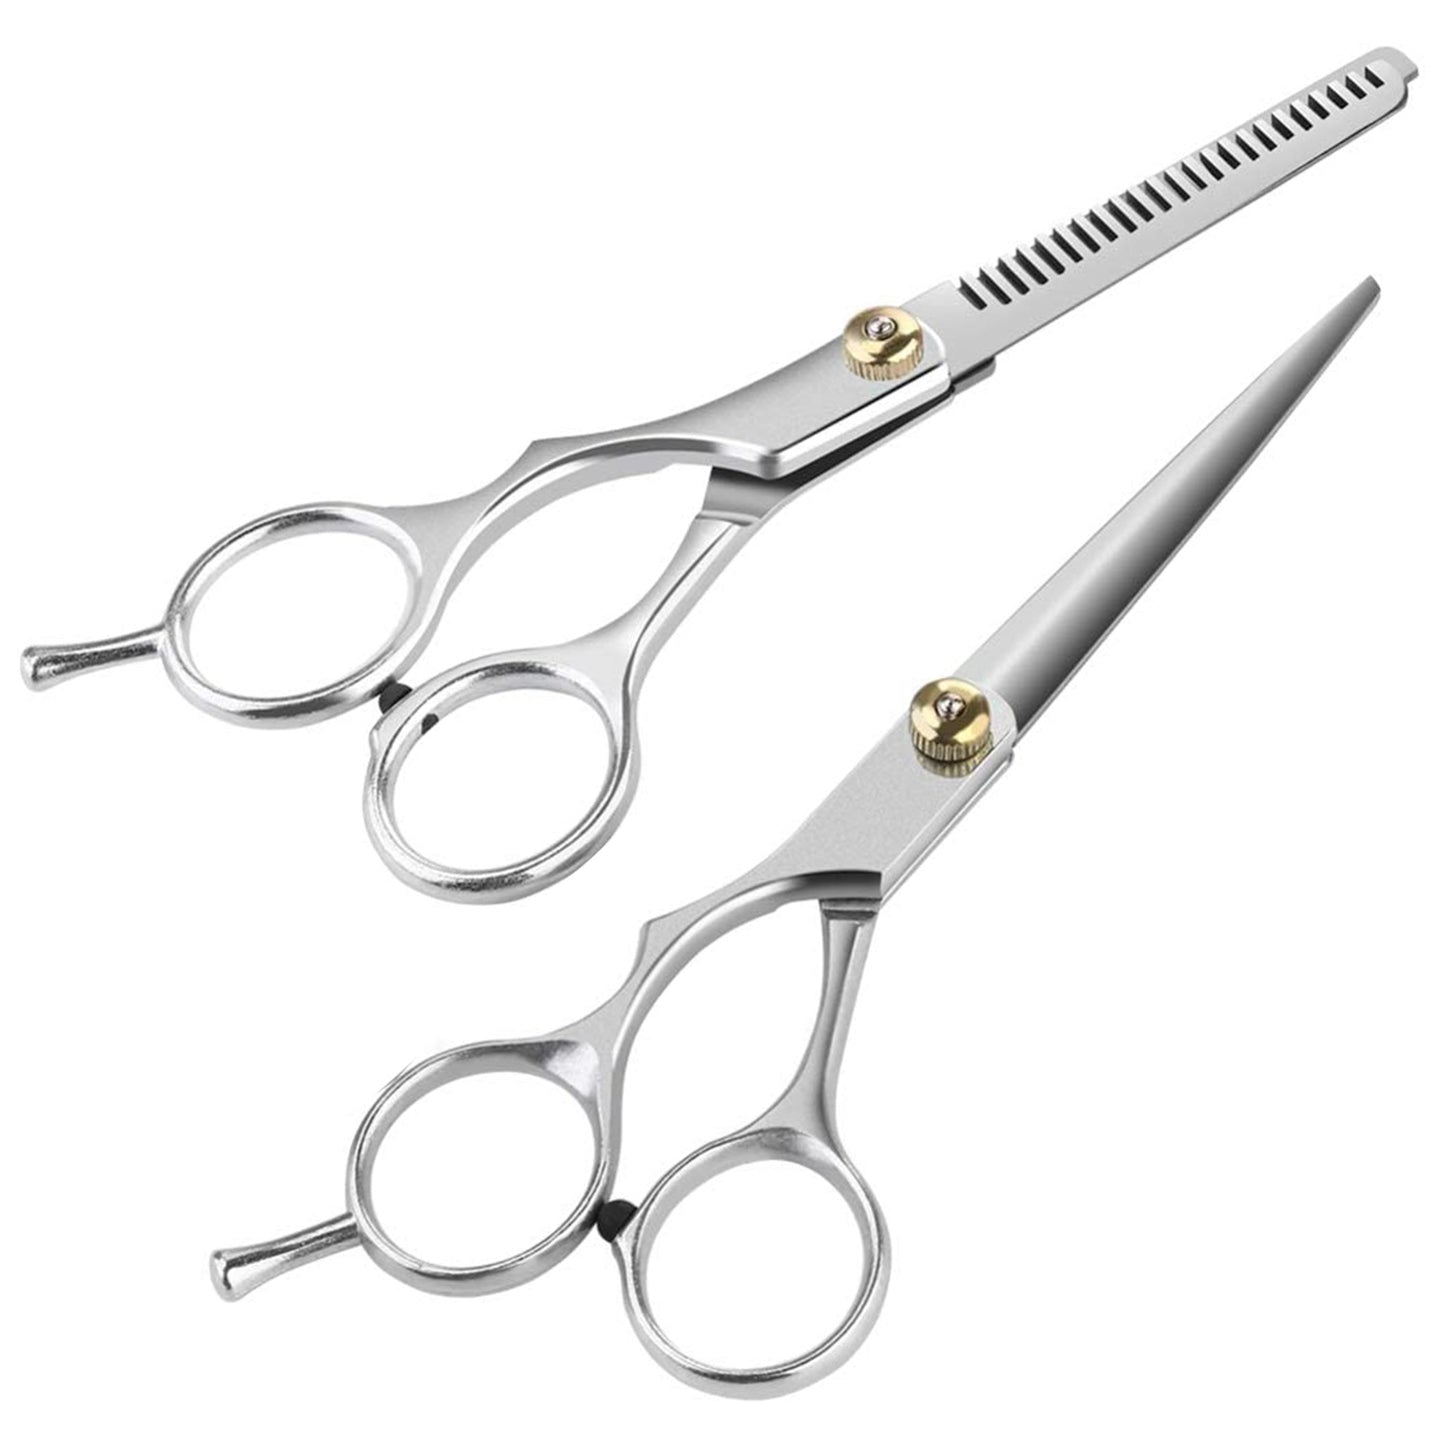 Professional Hair Cutting Scissors Set